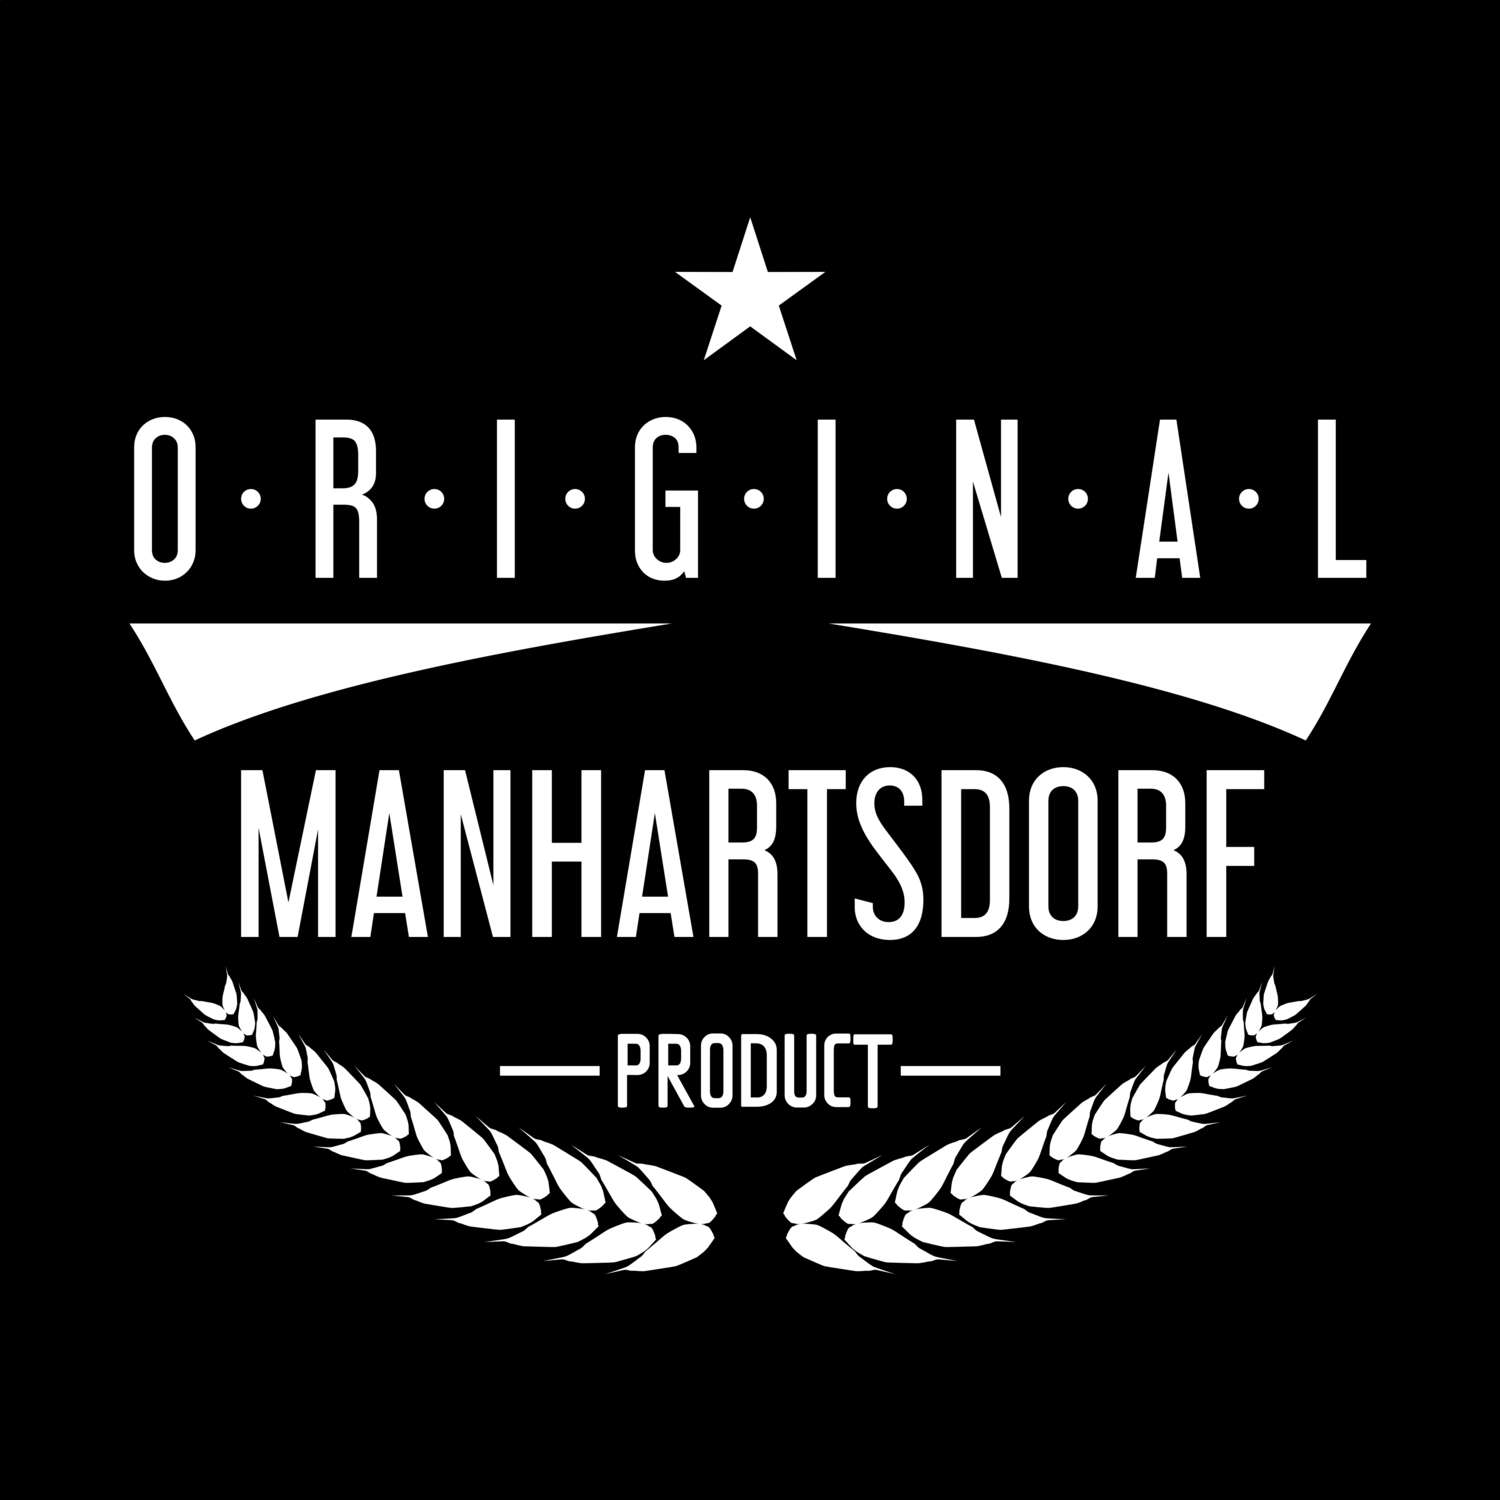 Manhartsdorf T-Shirt »Original Product«